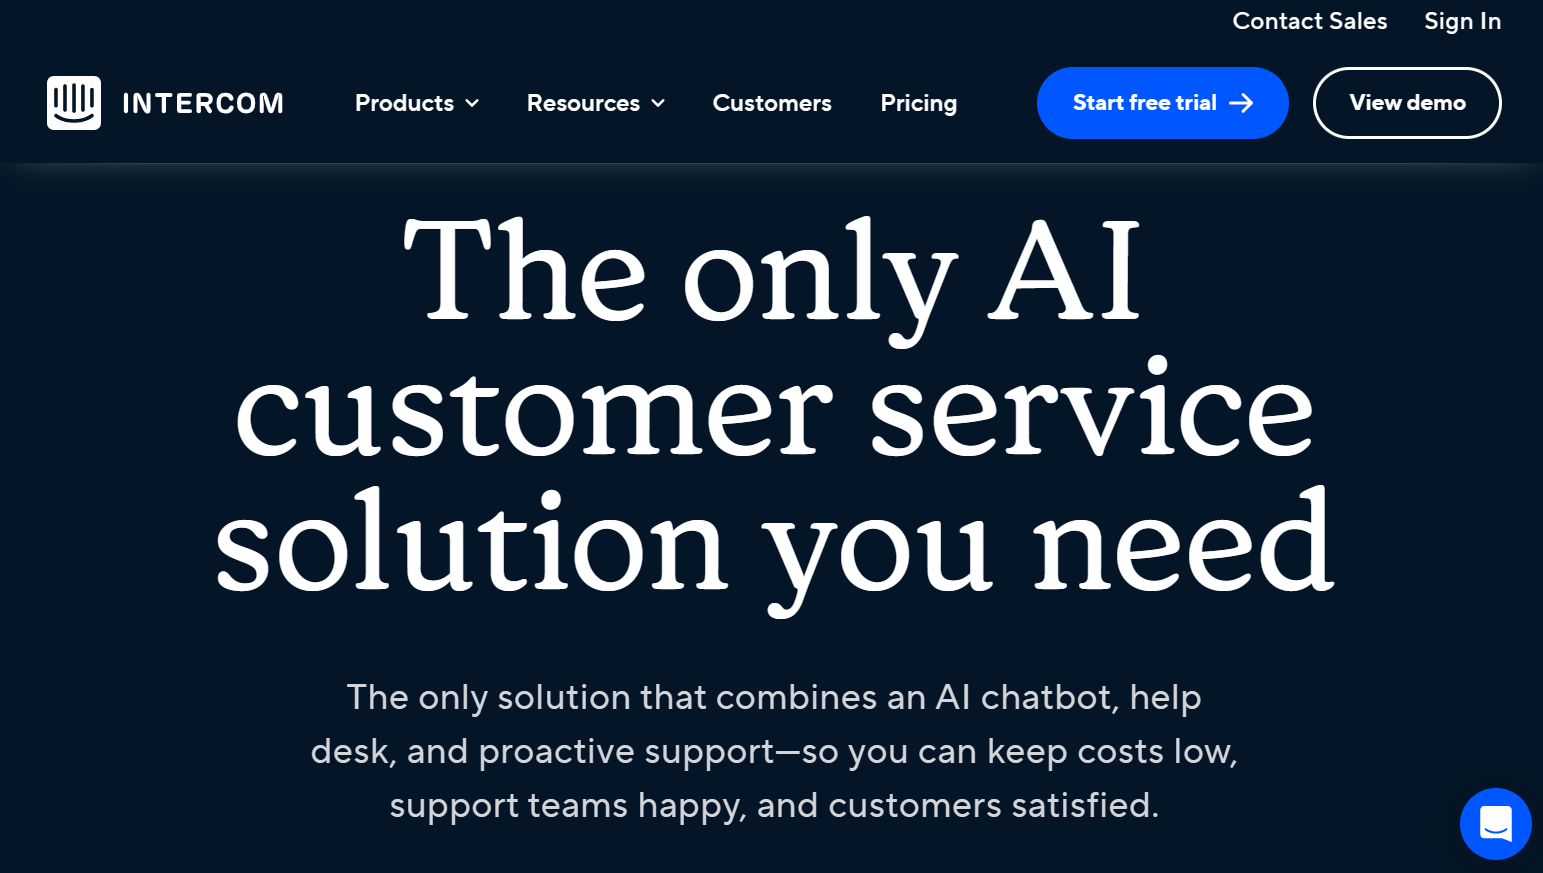 intercom.com – The only AI solution you need